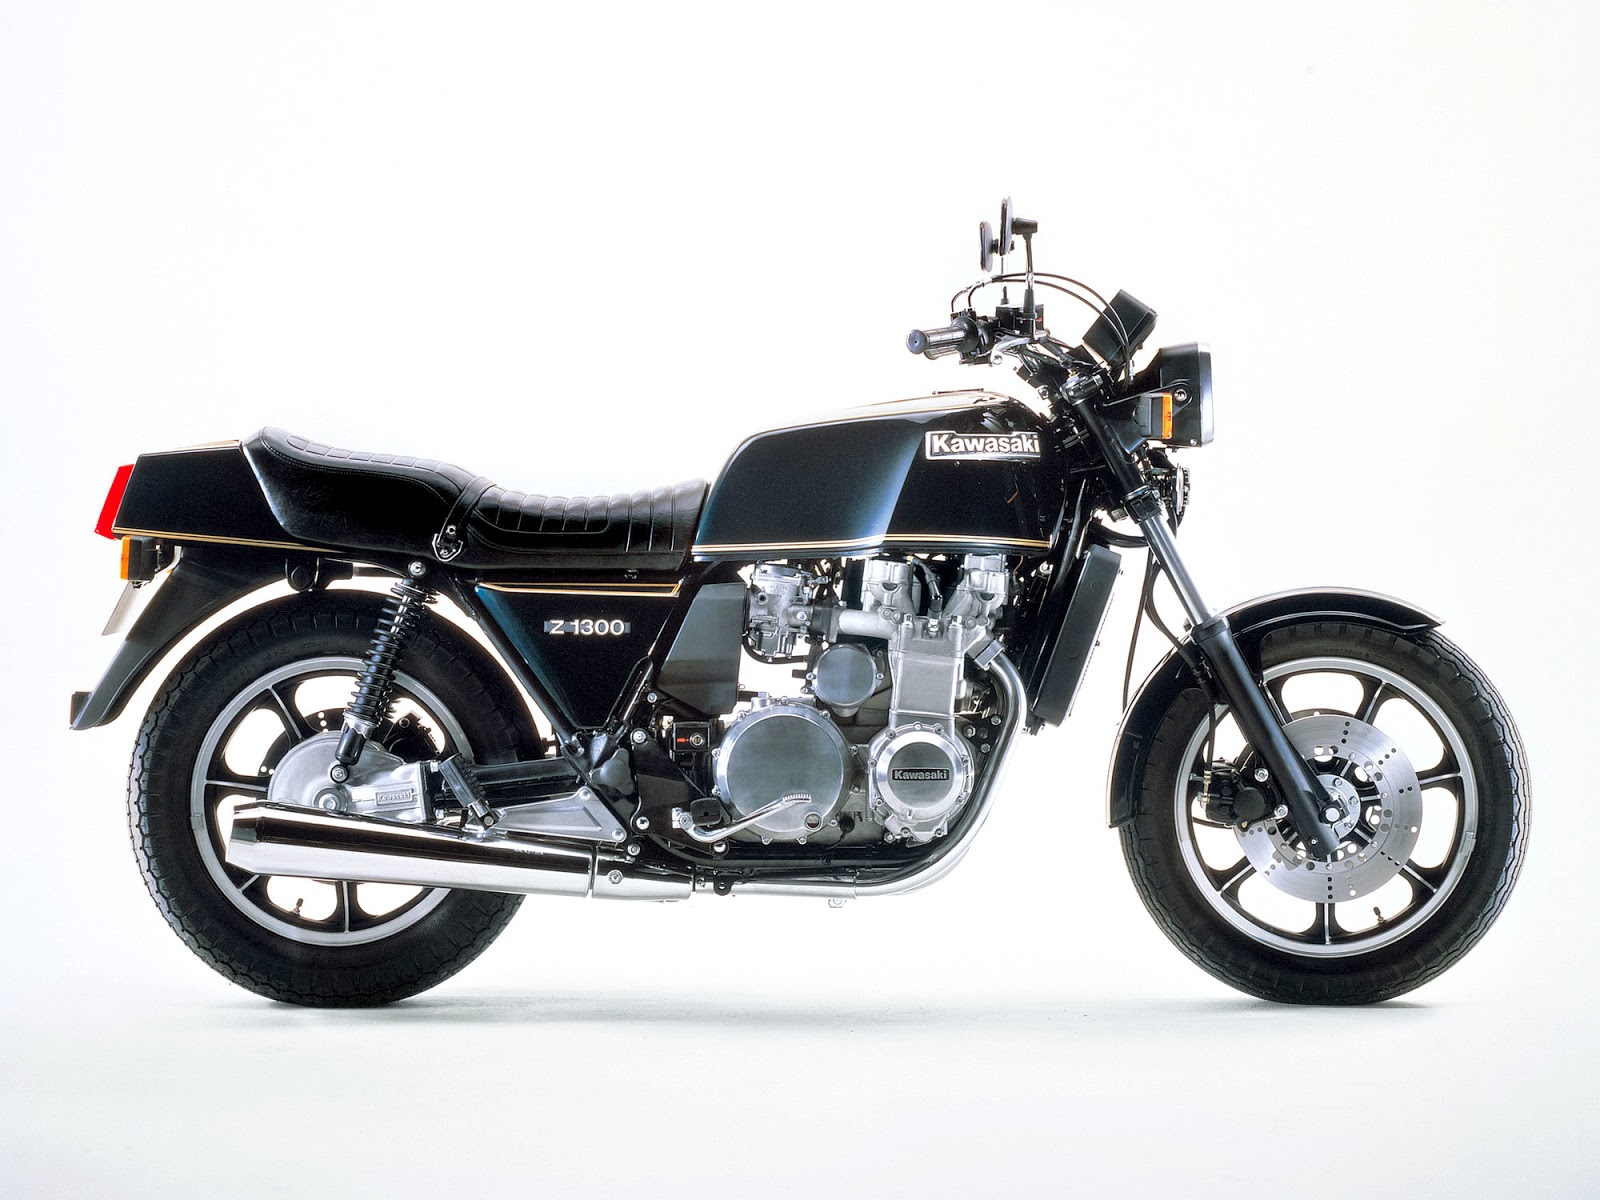 classic car / bike: 1970s Japanese Motorbikes